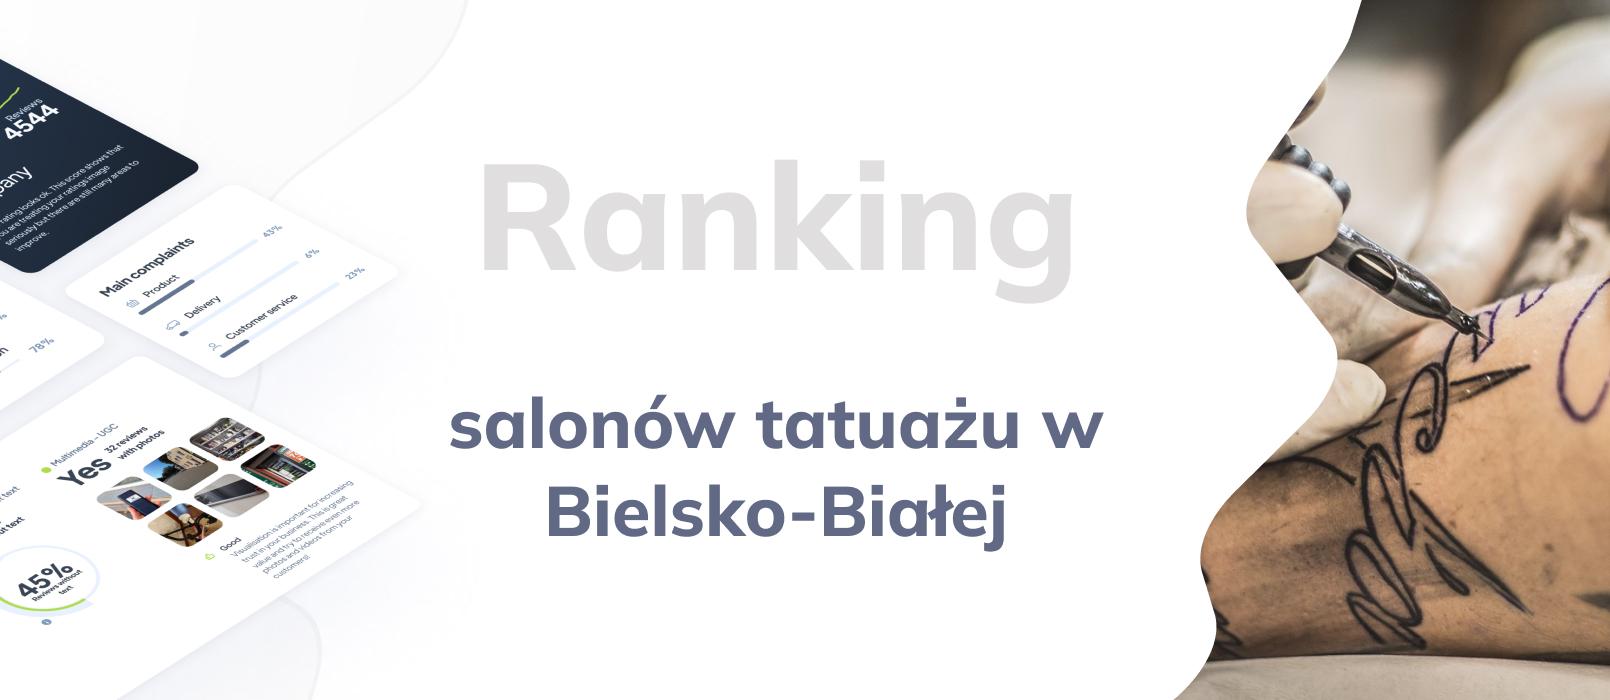 Salony tatuażu w Bielsko-Białej - ranking TOP 10